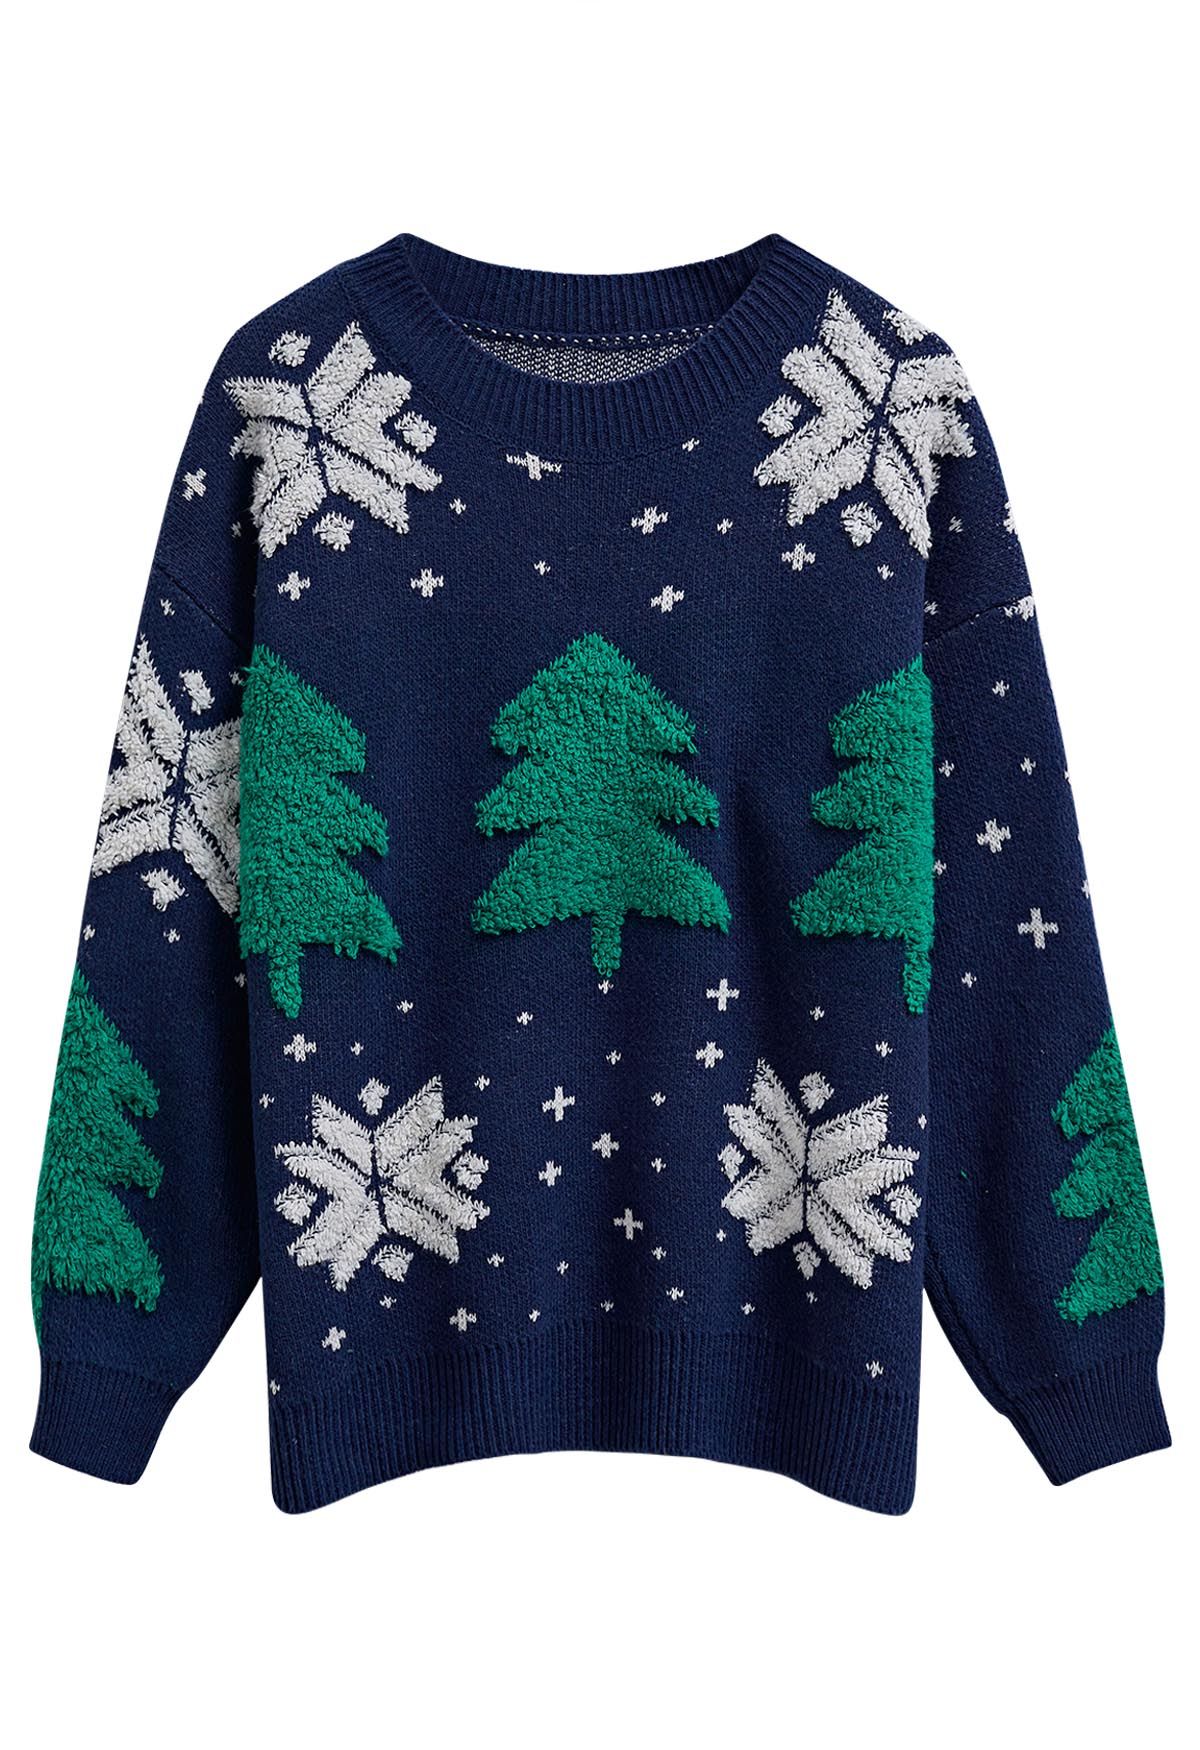 Christmas Tree and Snowflake Jacquard Knit Sweater in Indigo - Retro ...